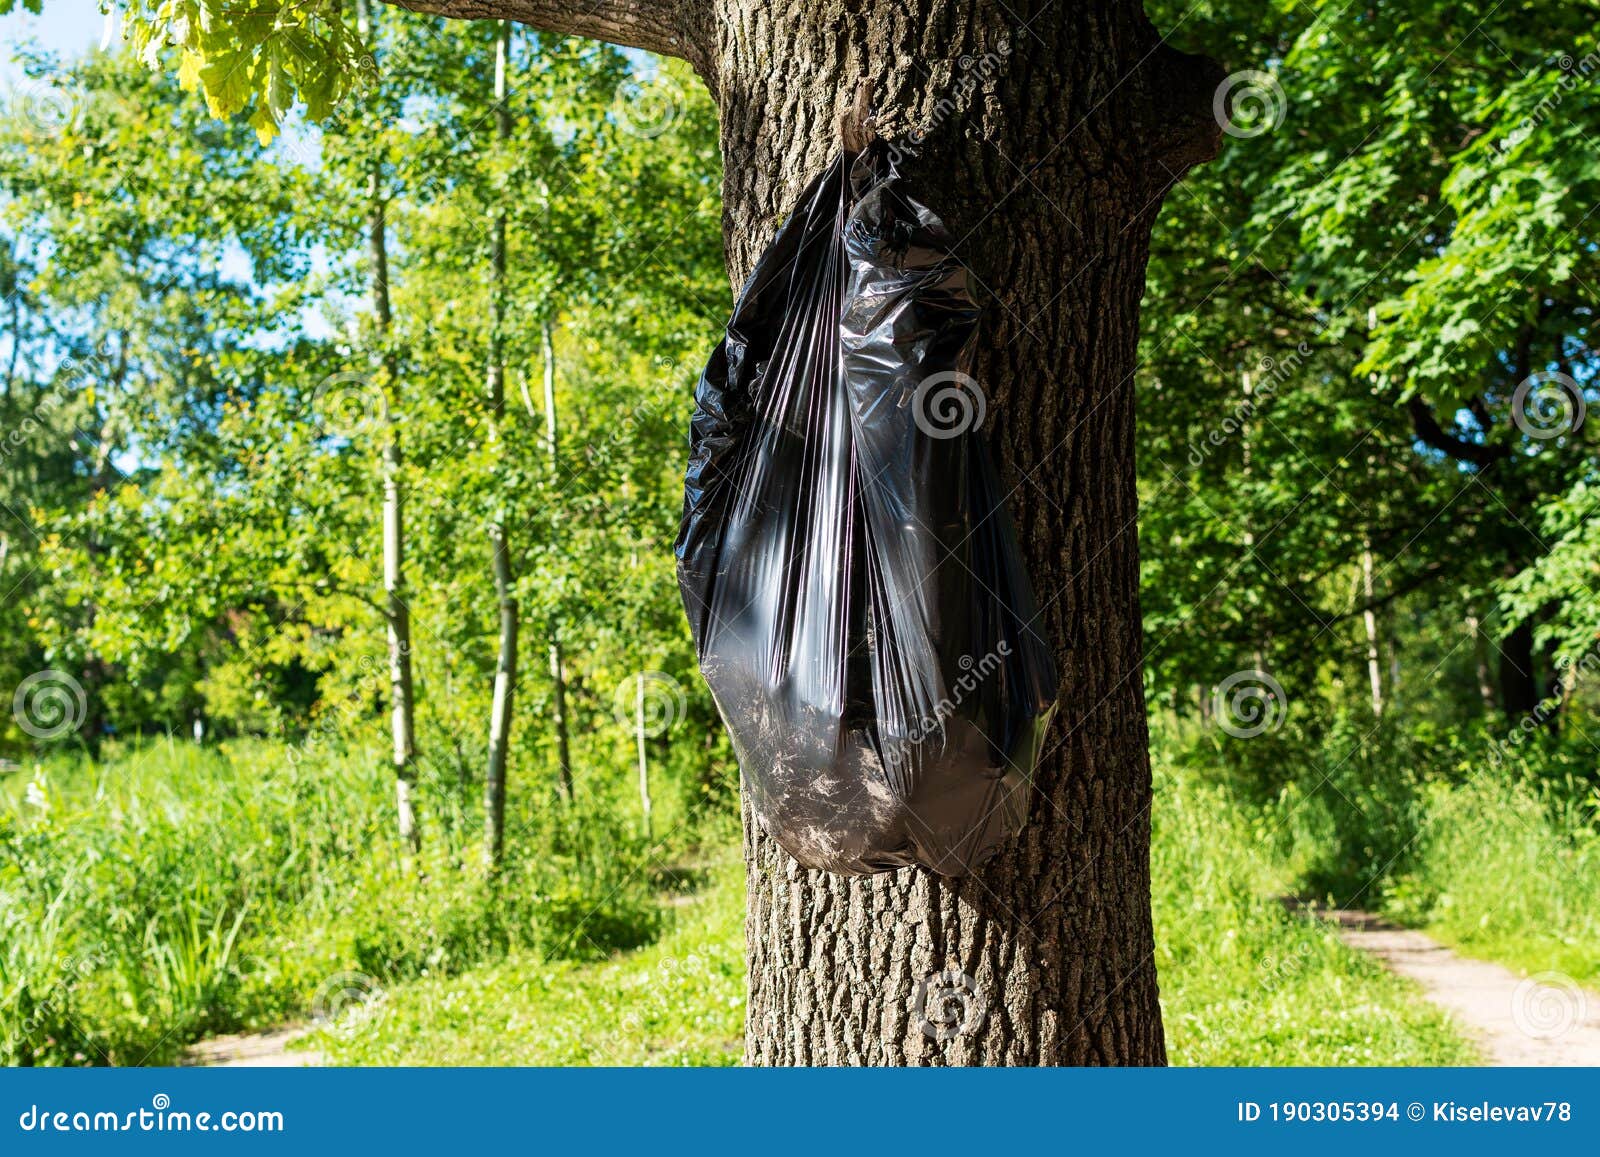 https://thumbs.dreamstime.com/z/black-plastic-trash-bag-hanging-tree-caring-environment-selective-focus-black-plastic-trash-bag-hanging-tree-190305394.jpg